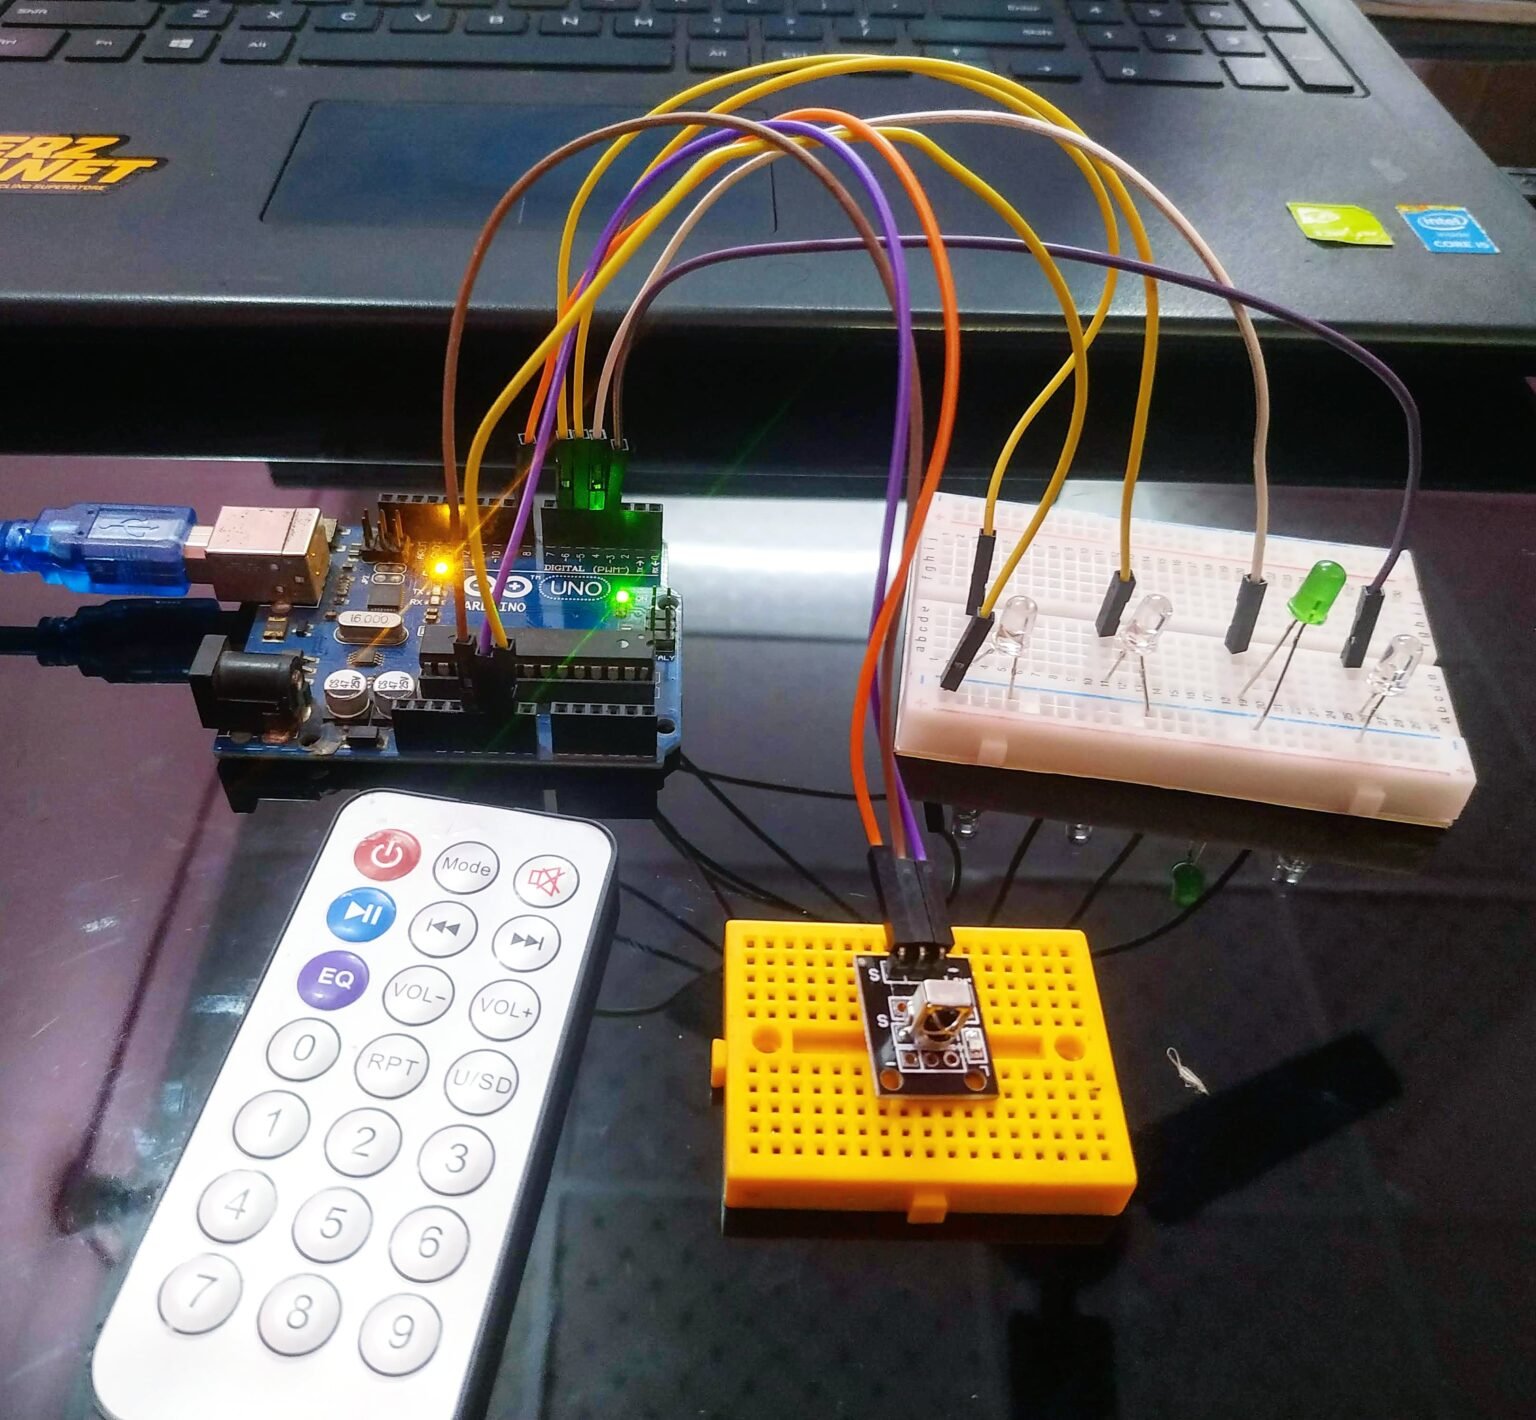 arduino yun iot remote monitorcontrol